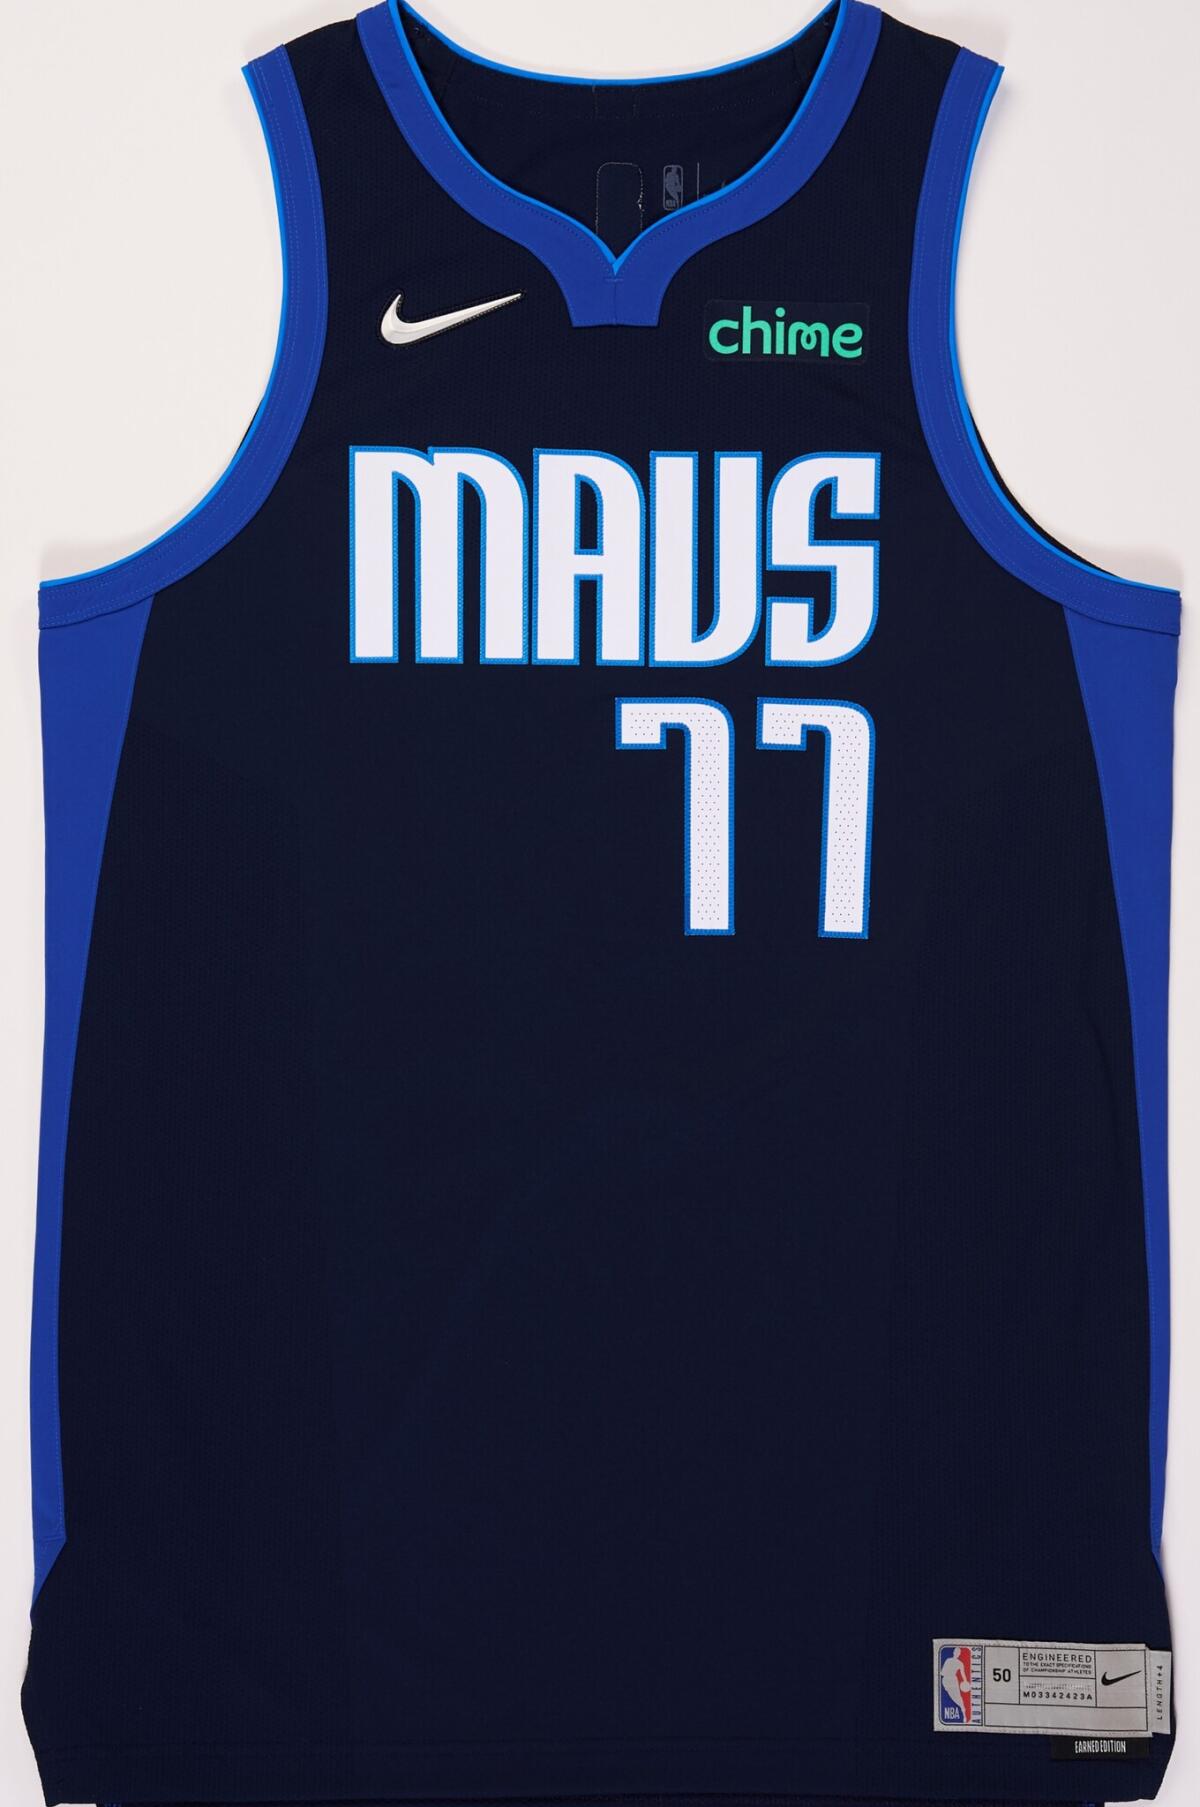 Dallas Mavericks "Earned Edition" jersey